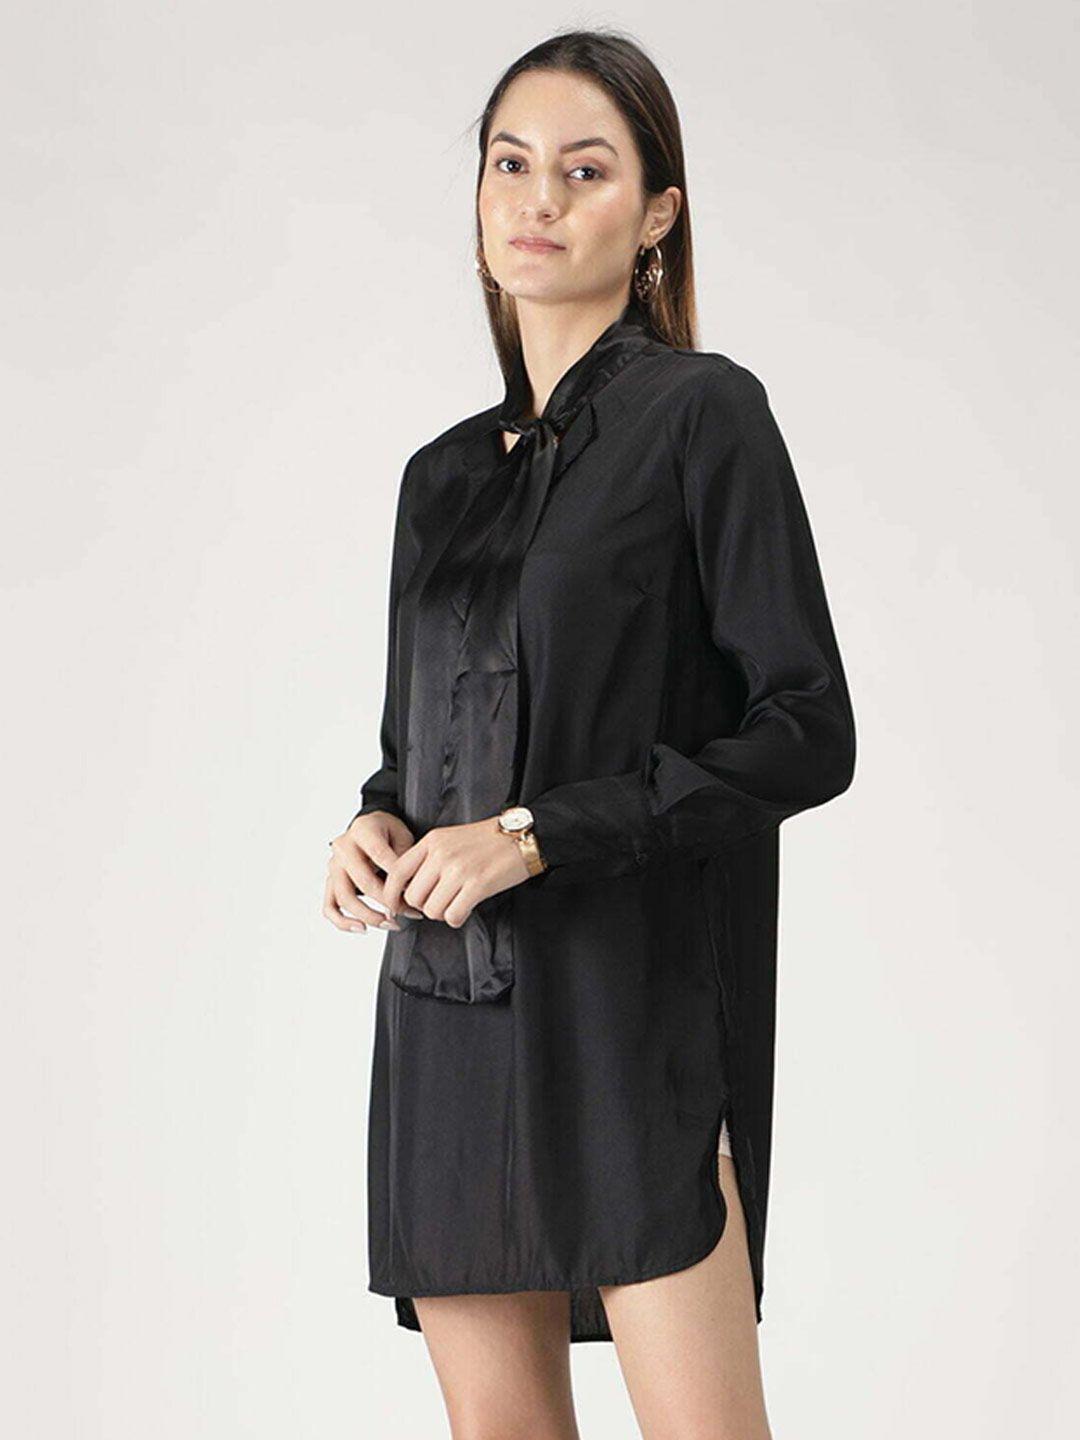 the black lover tie-up neck log sleeve cotton shirt style mini dress